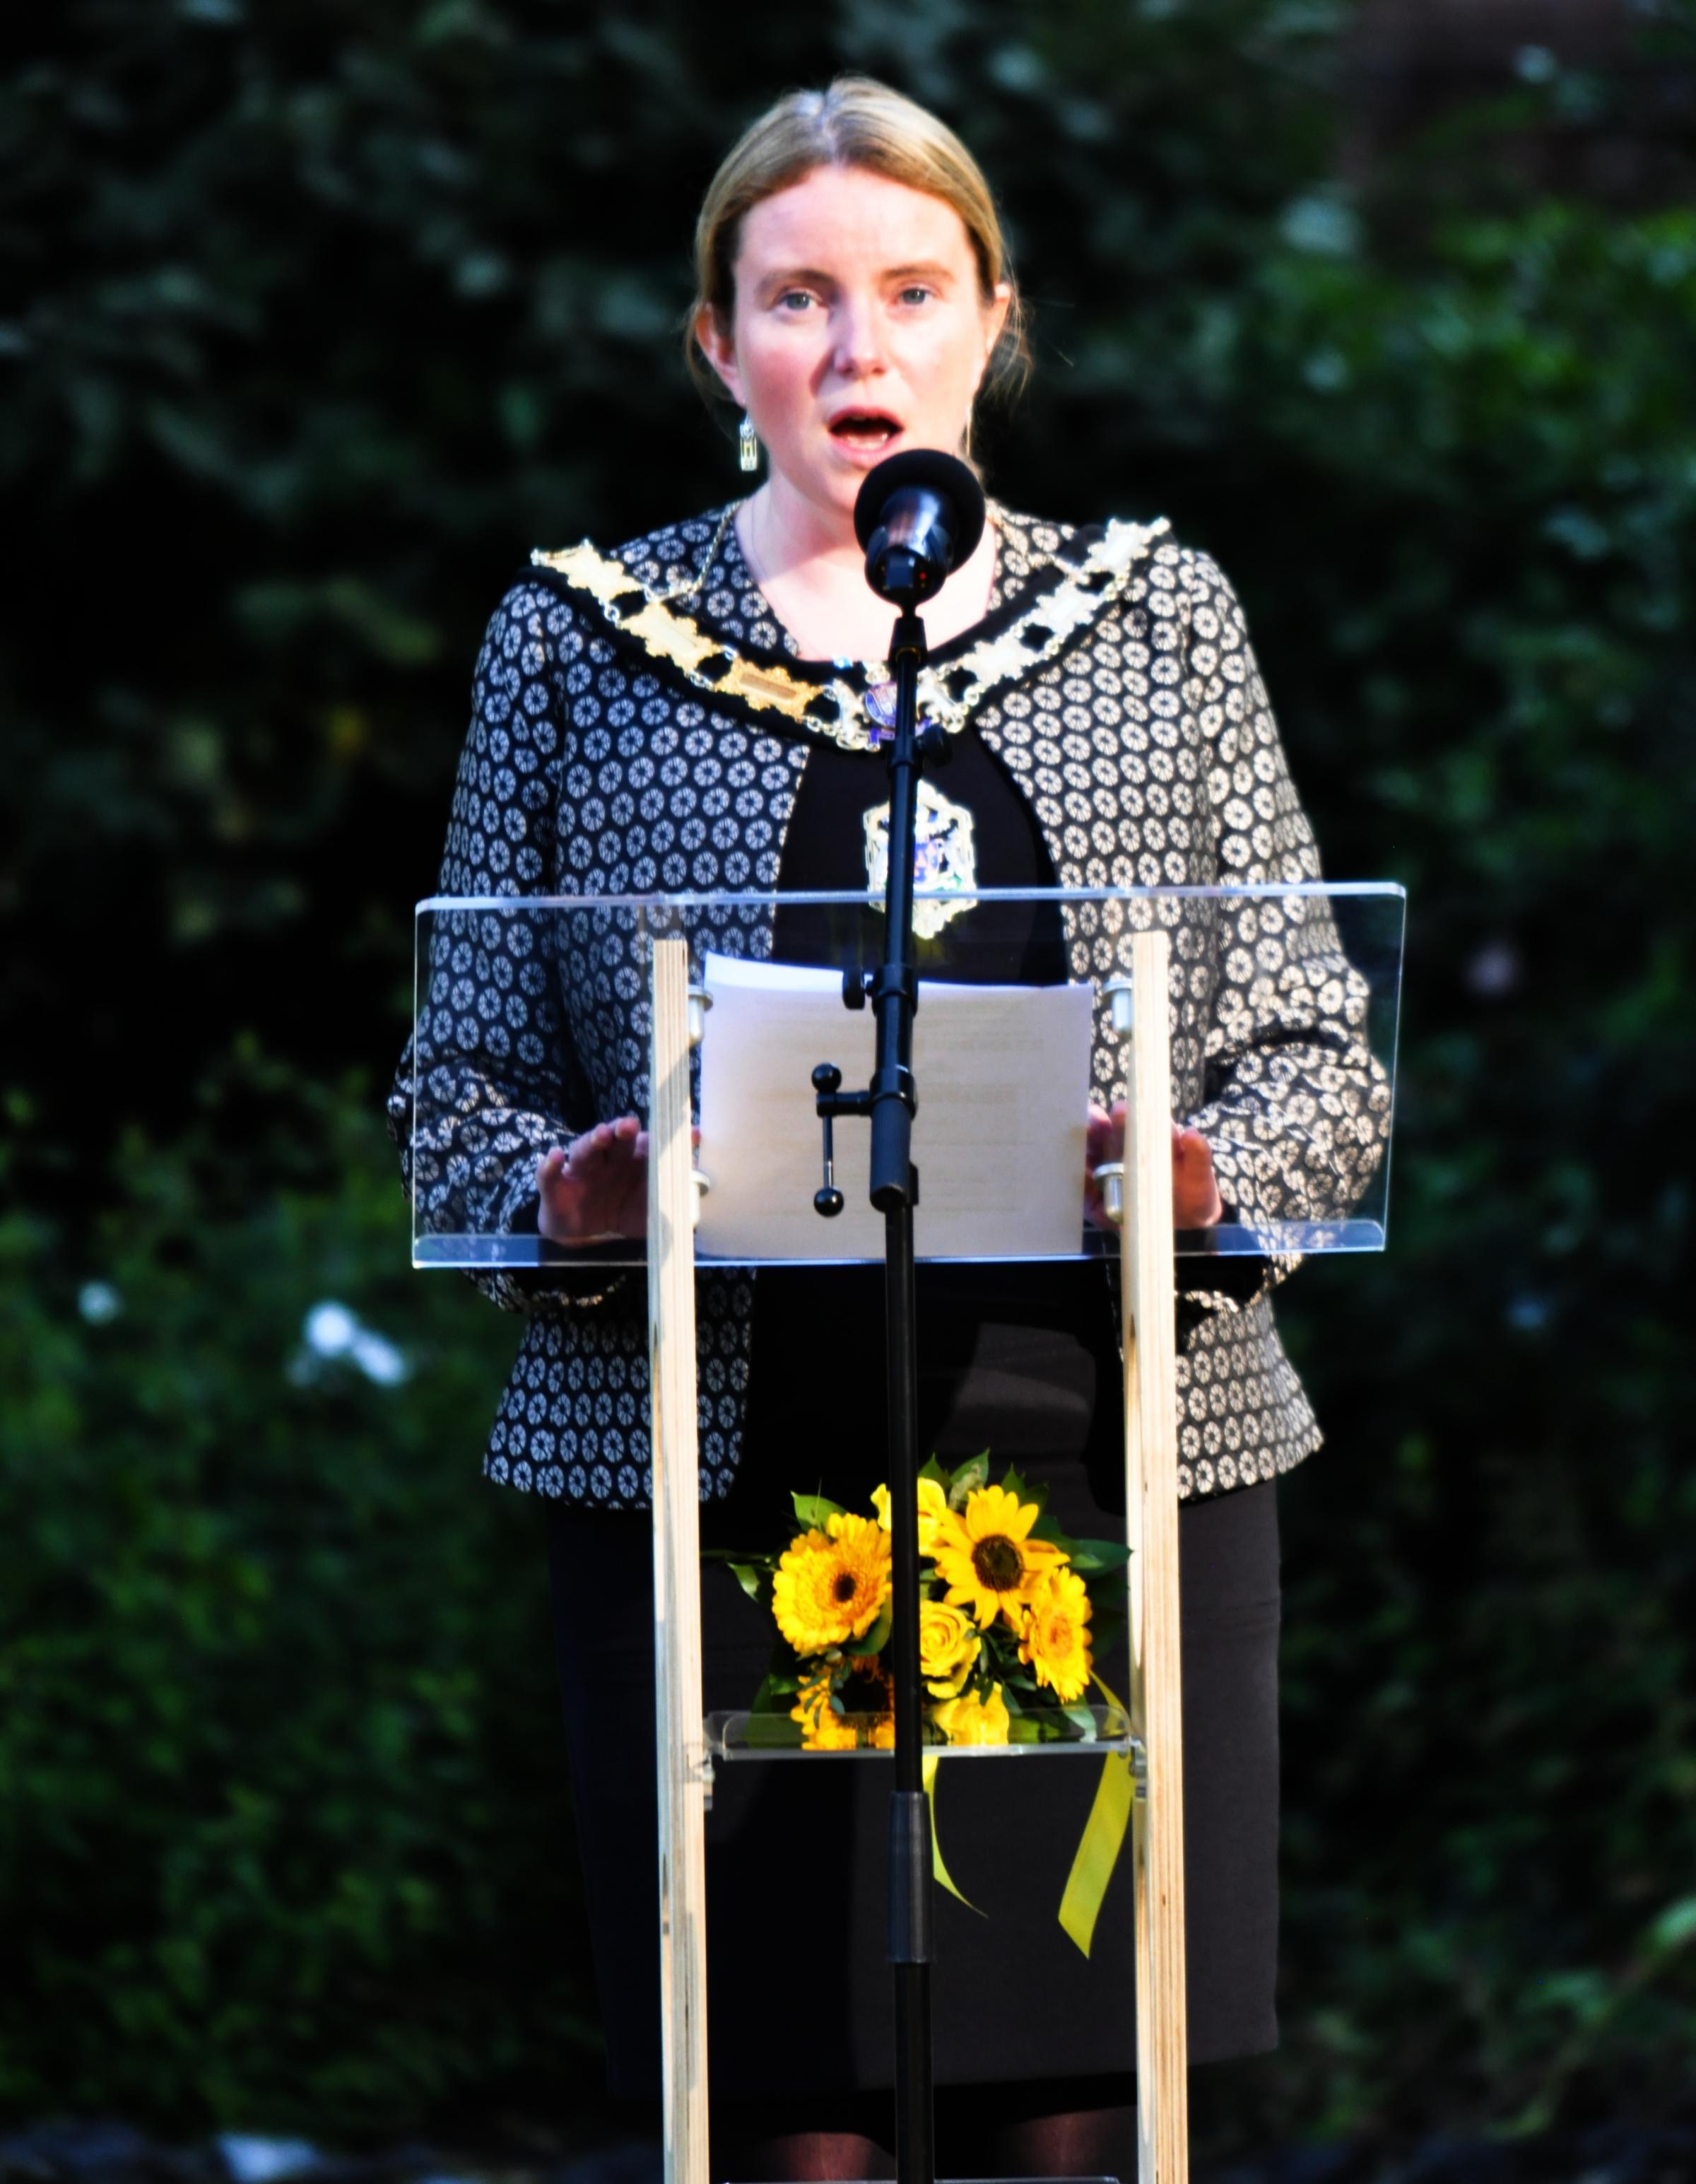 Mayor of Reading, Rachel Eden. Image via Paul King